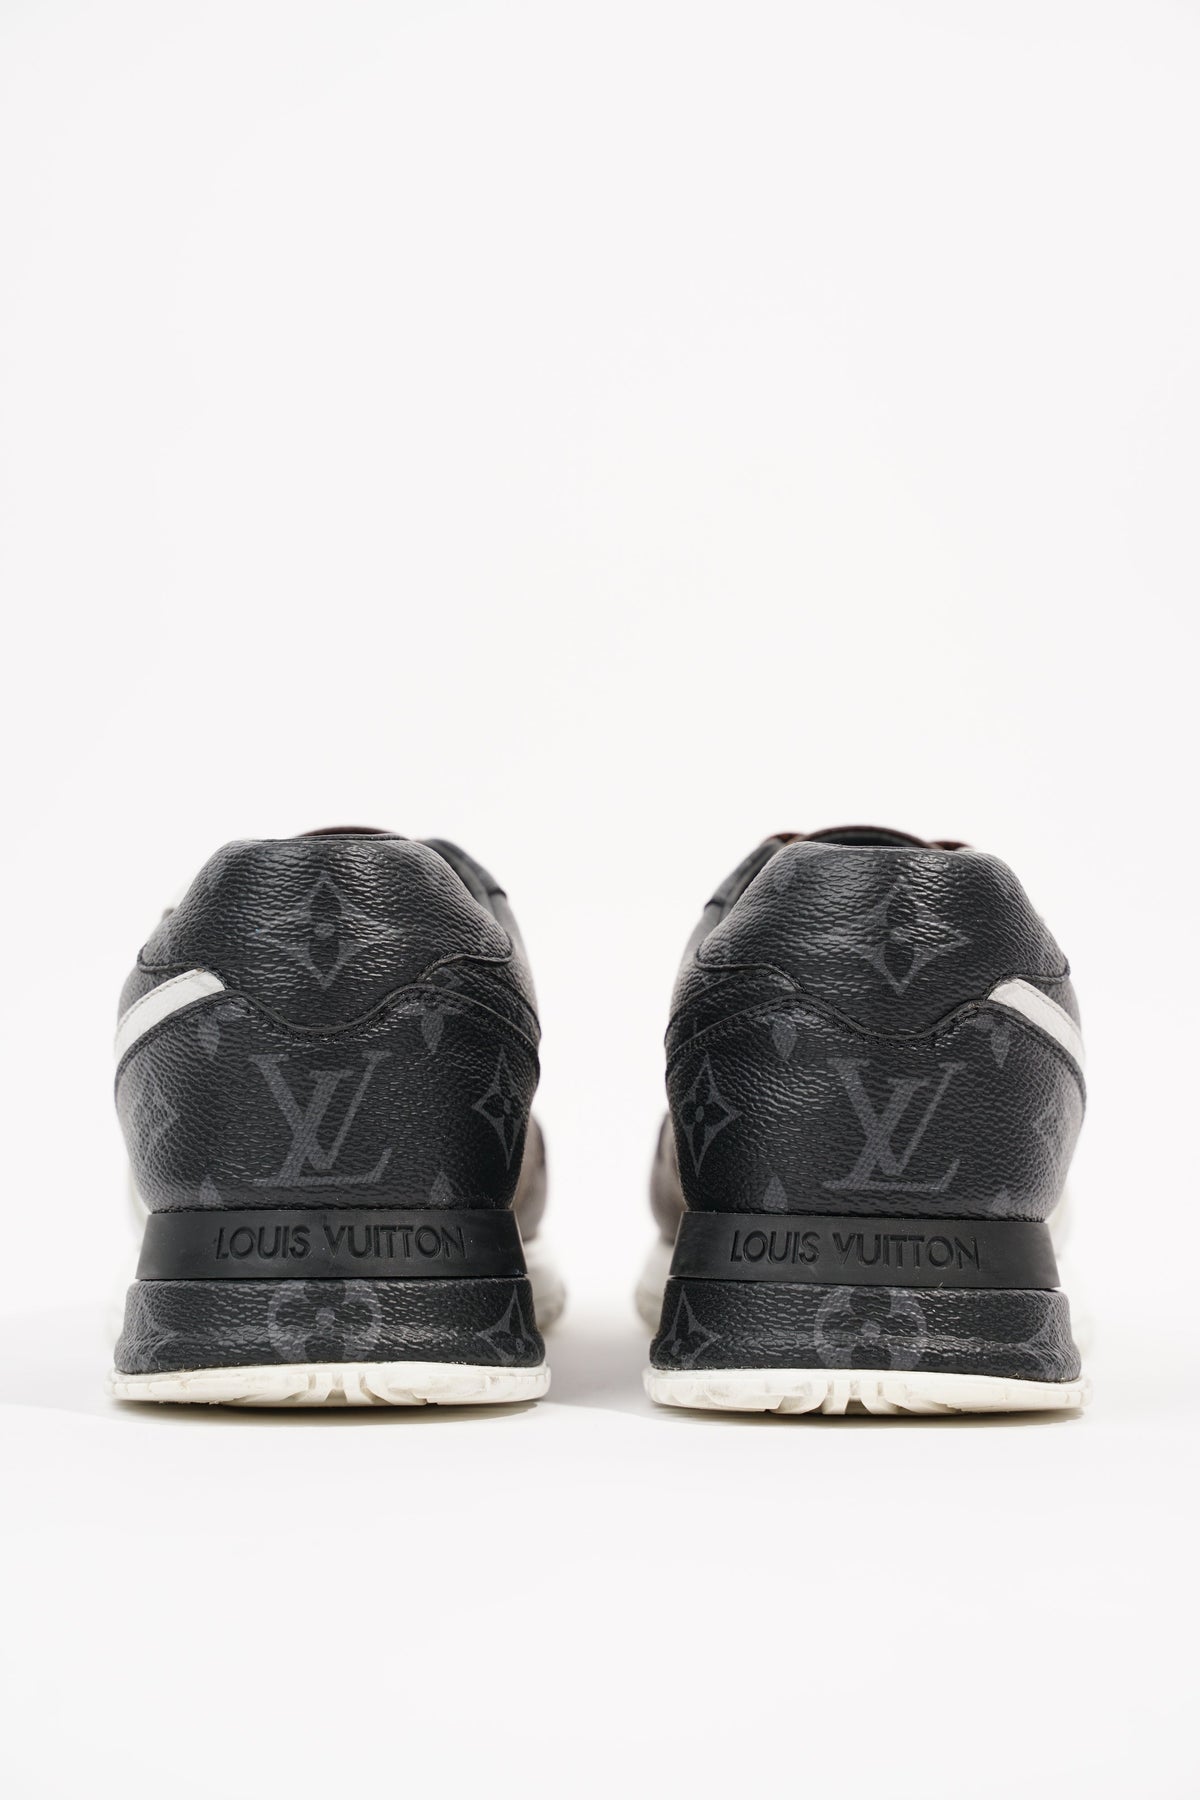 Run away leather trainers Louis Vuitton Black size 39 EU in